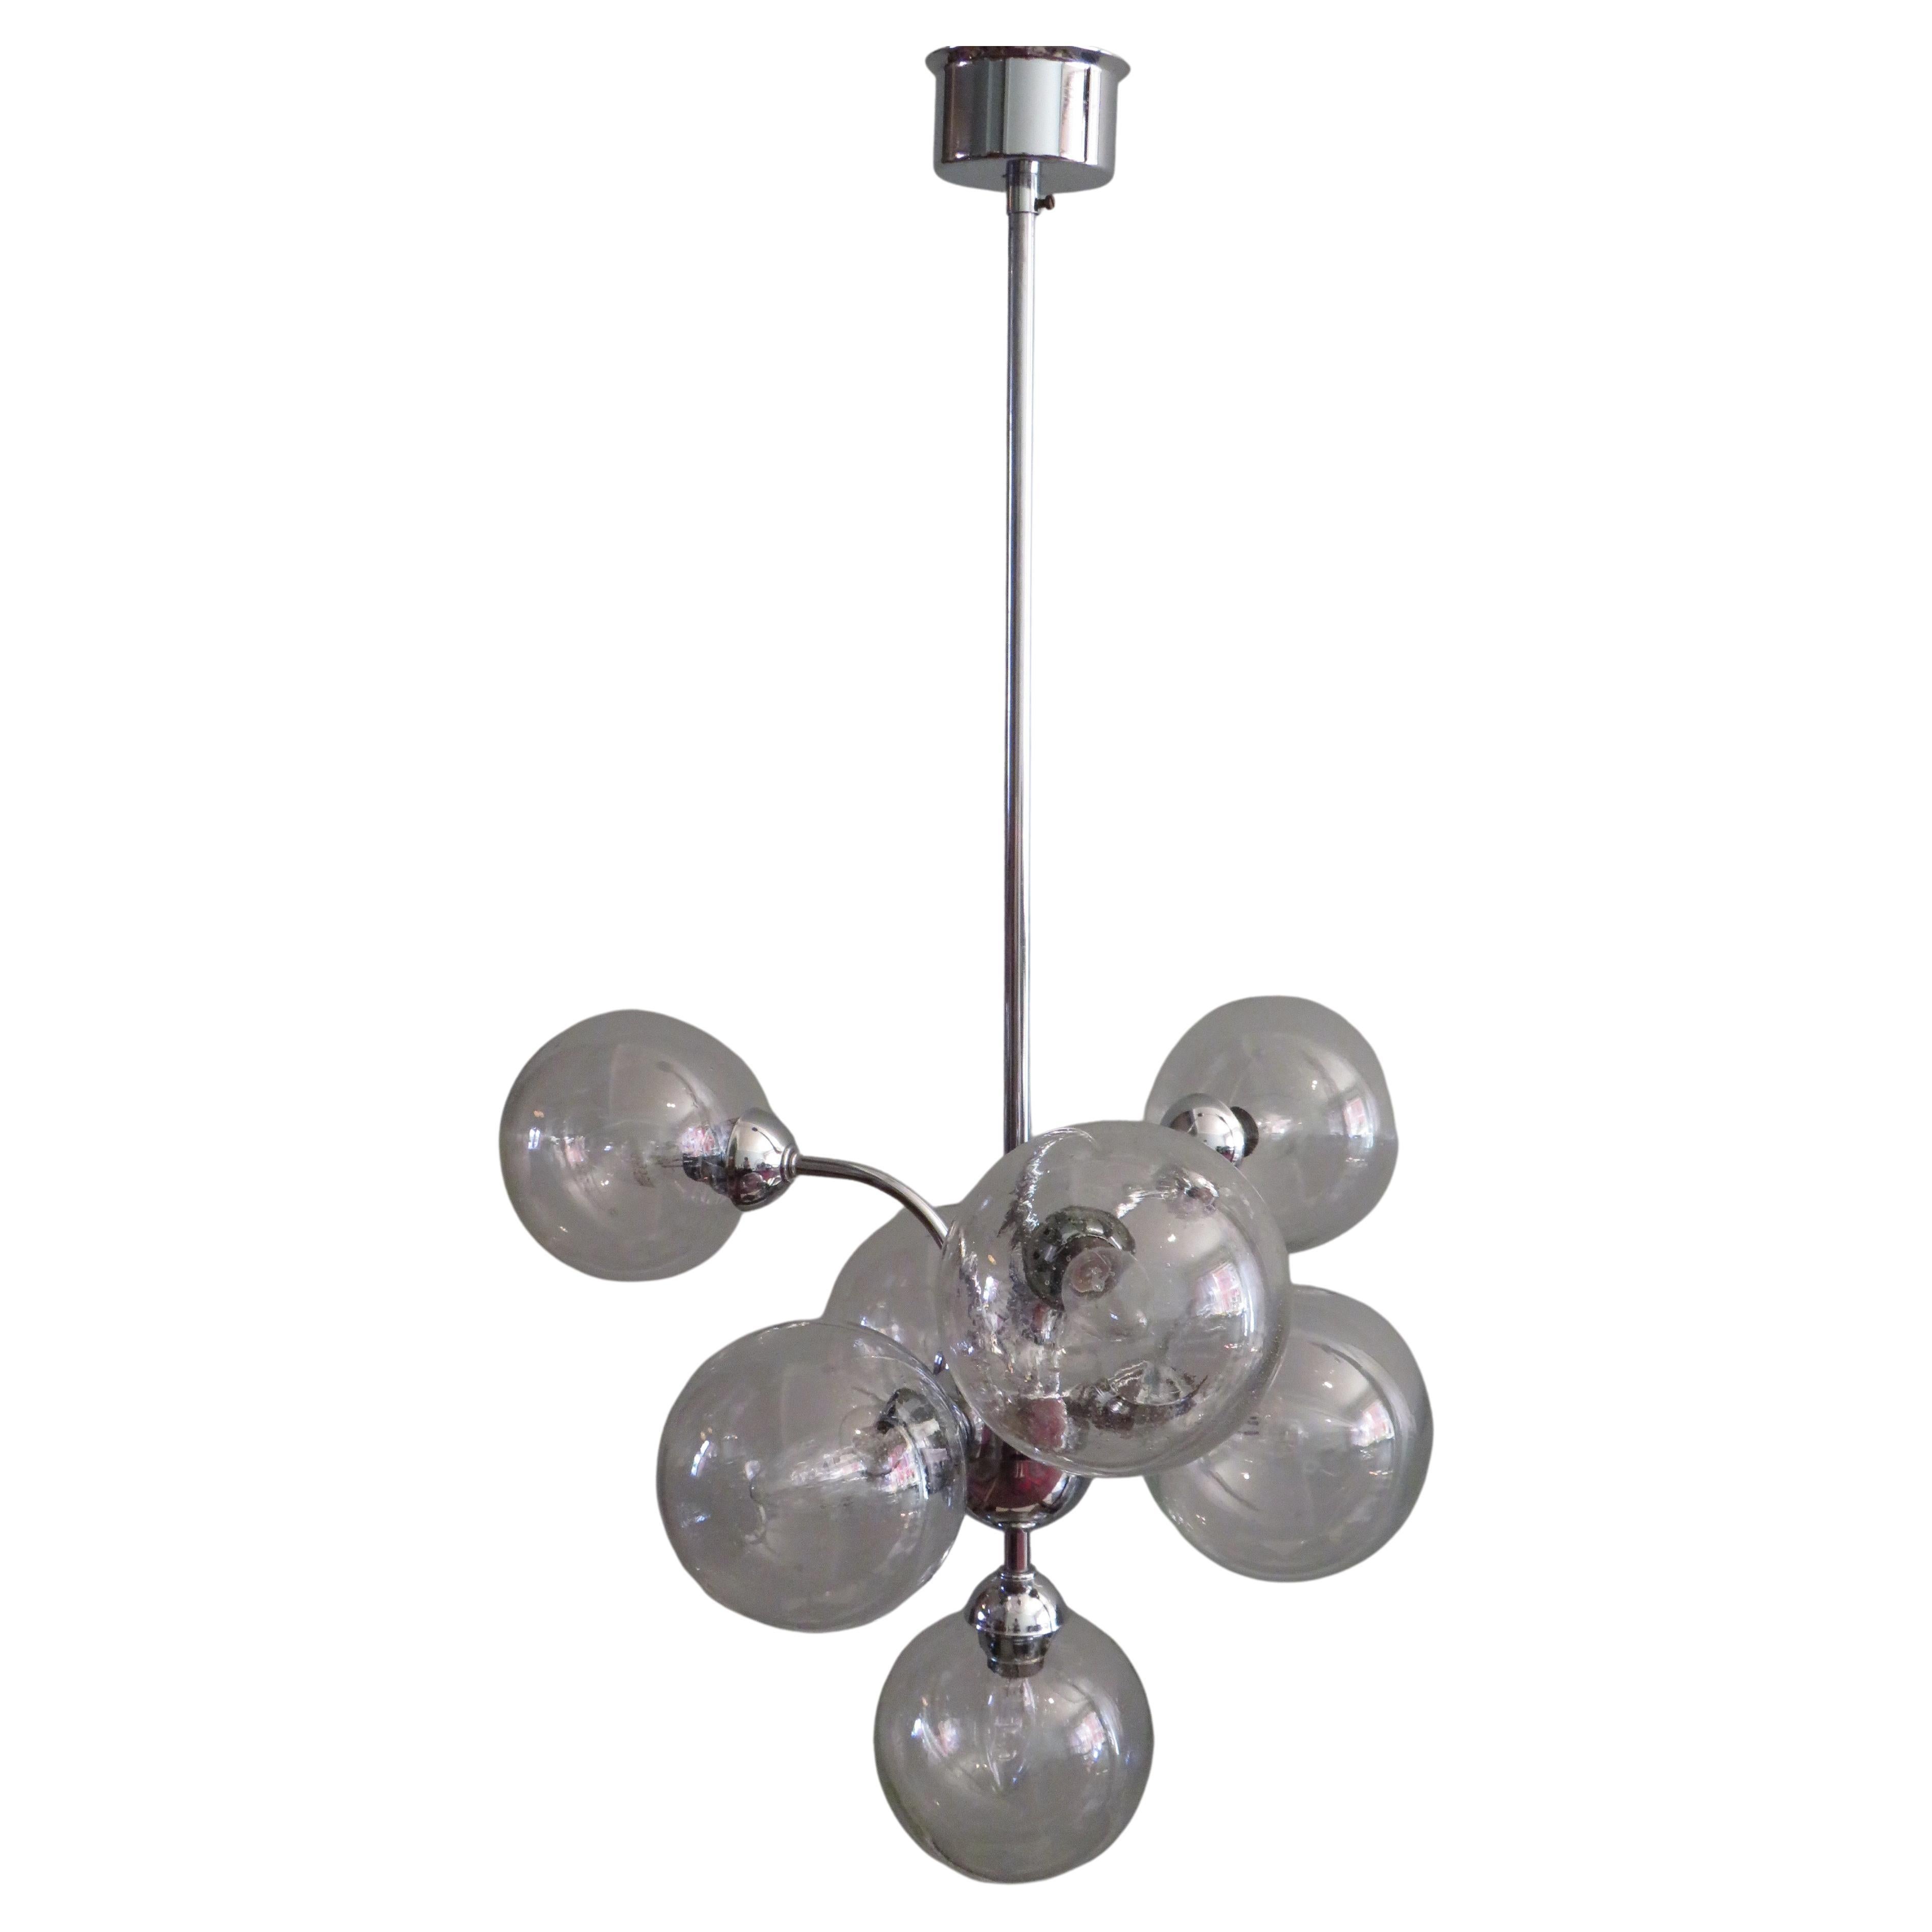 Sputnik chandelier 1970s by Massive Belgium For Sale